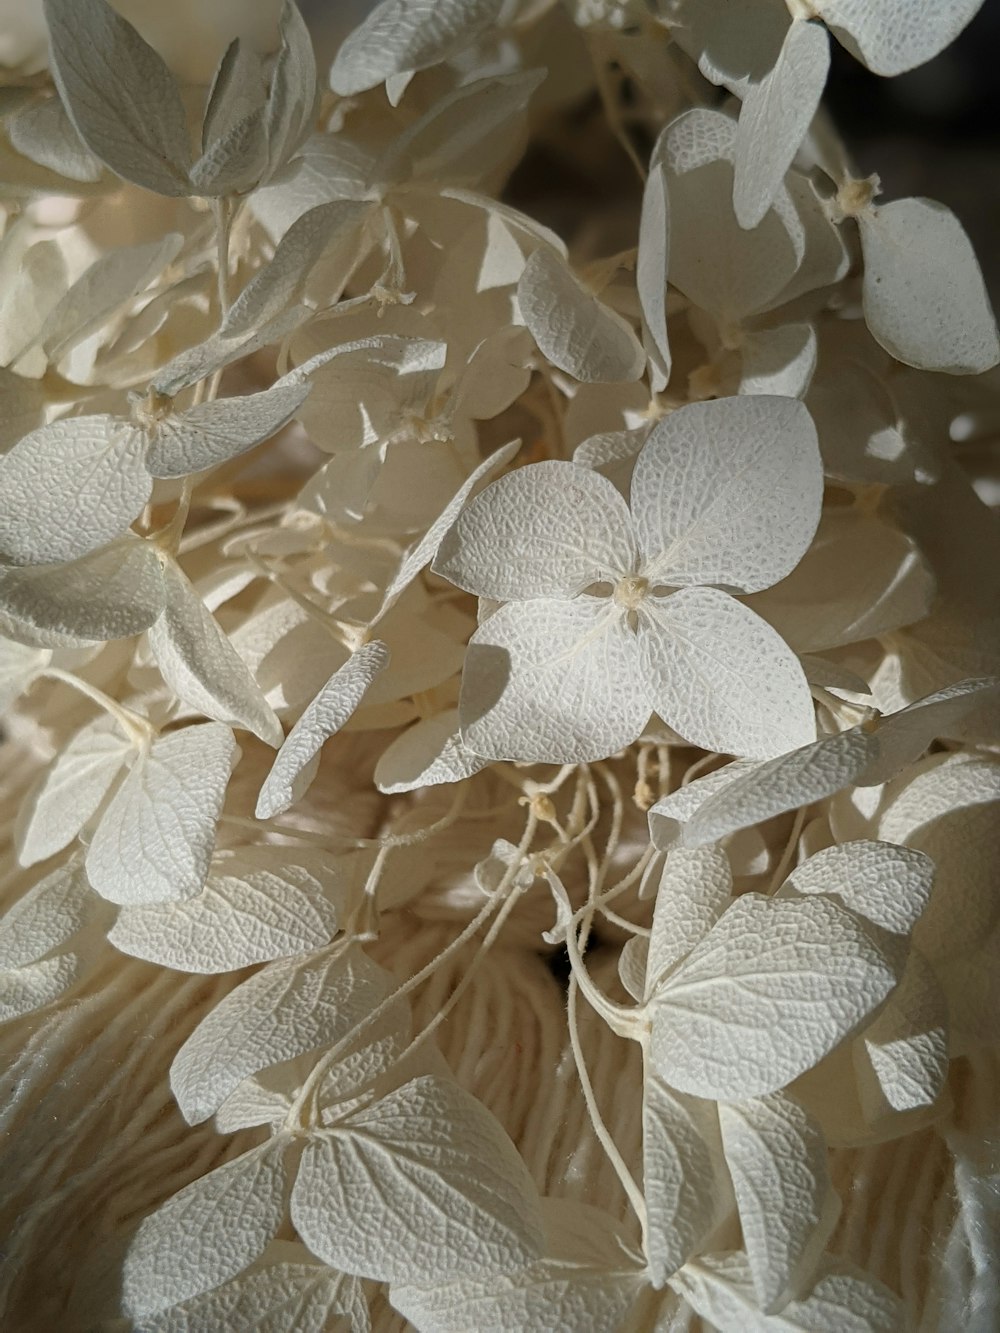 Fiore bianco in lente macro